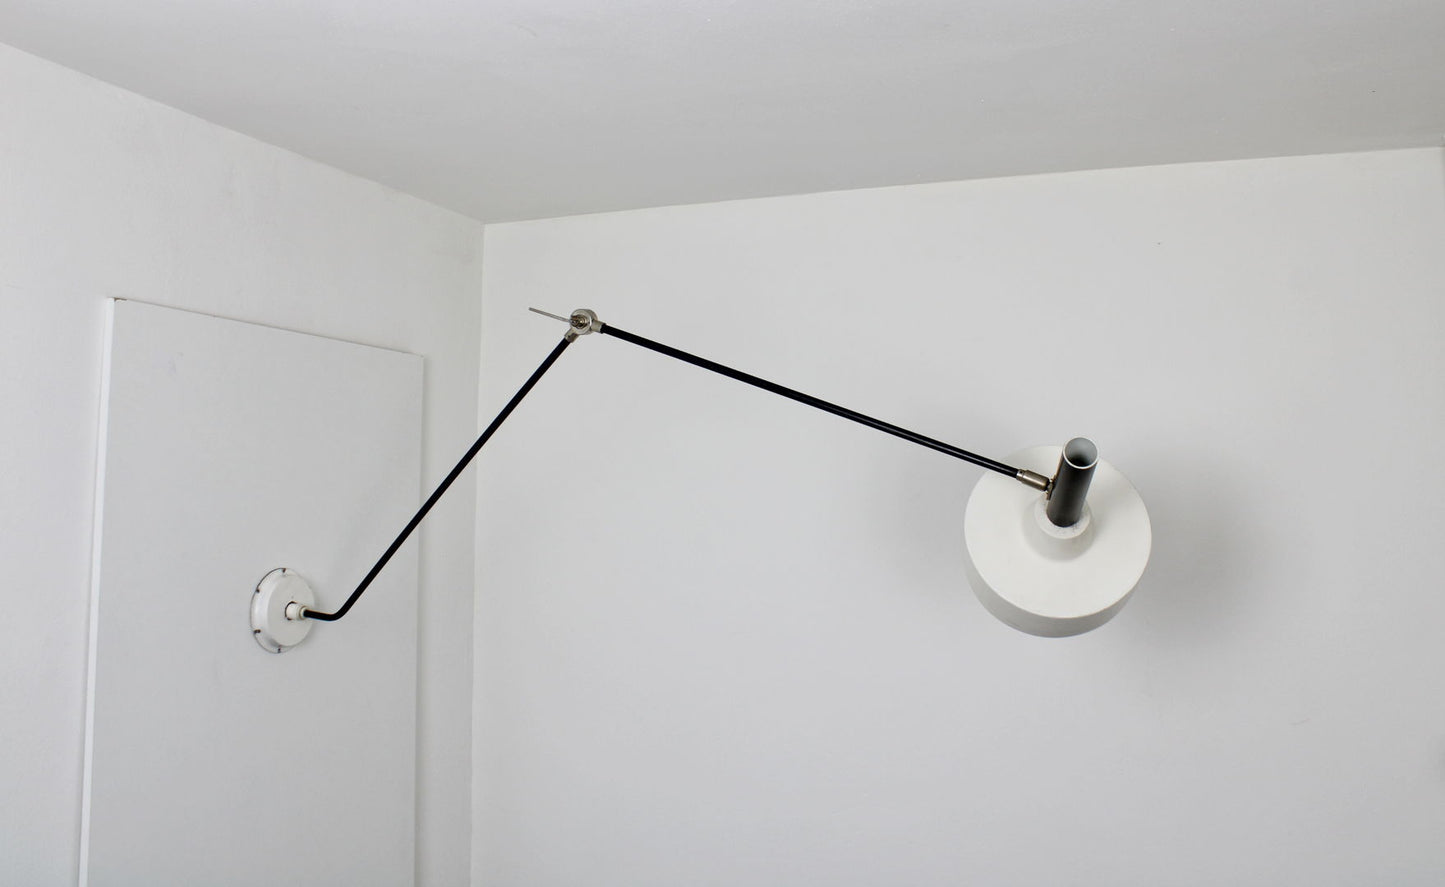 Model 190B ceiling lamp by Willem Hagoort for Hagoort lampen, 1956